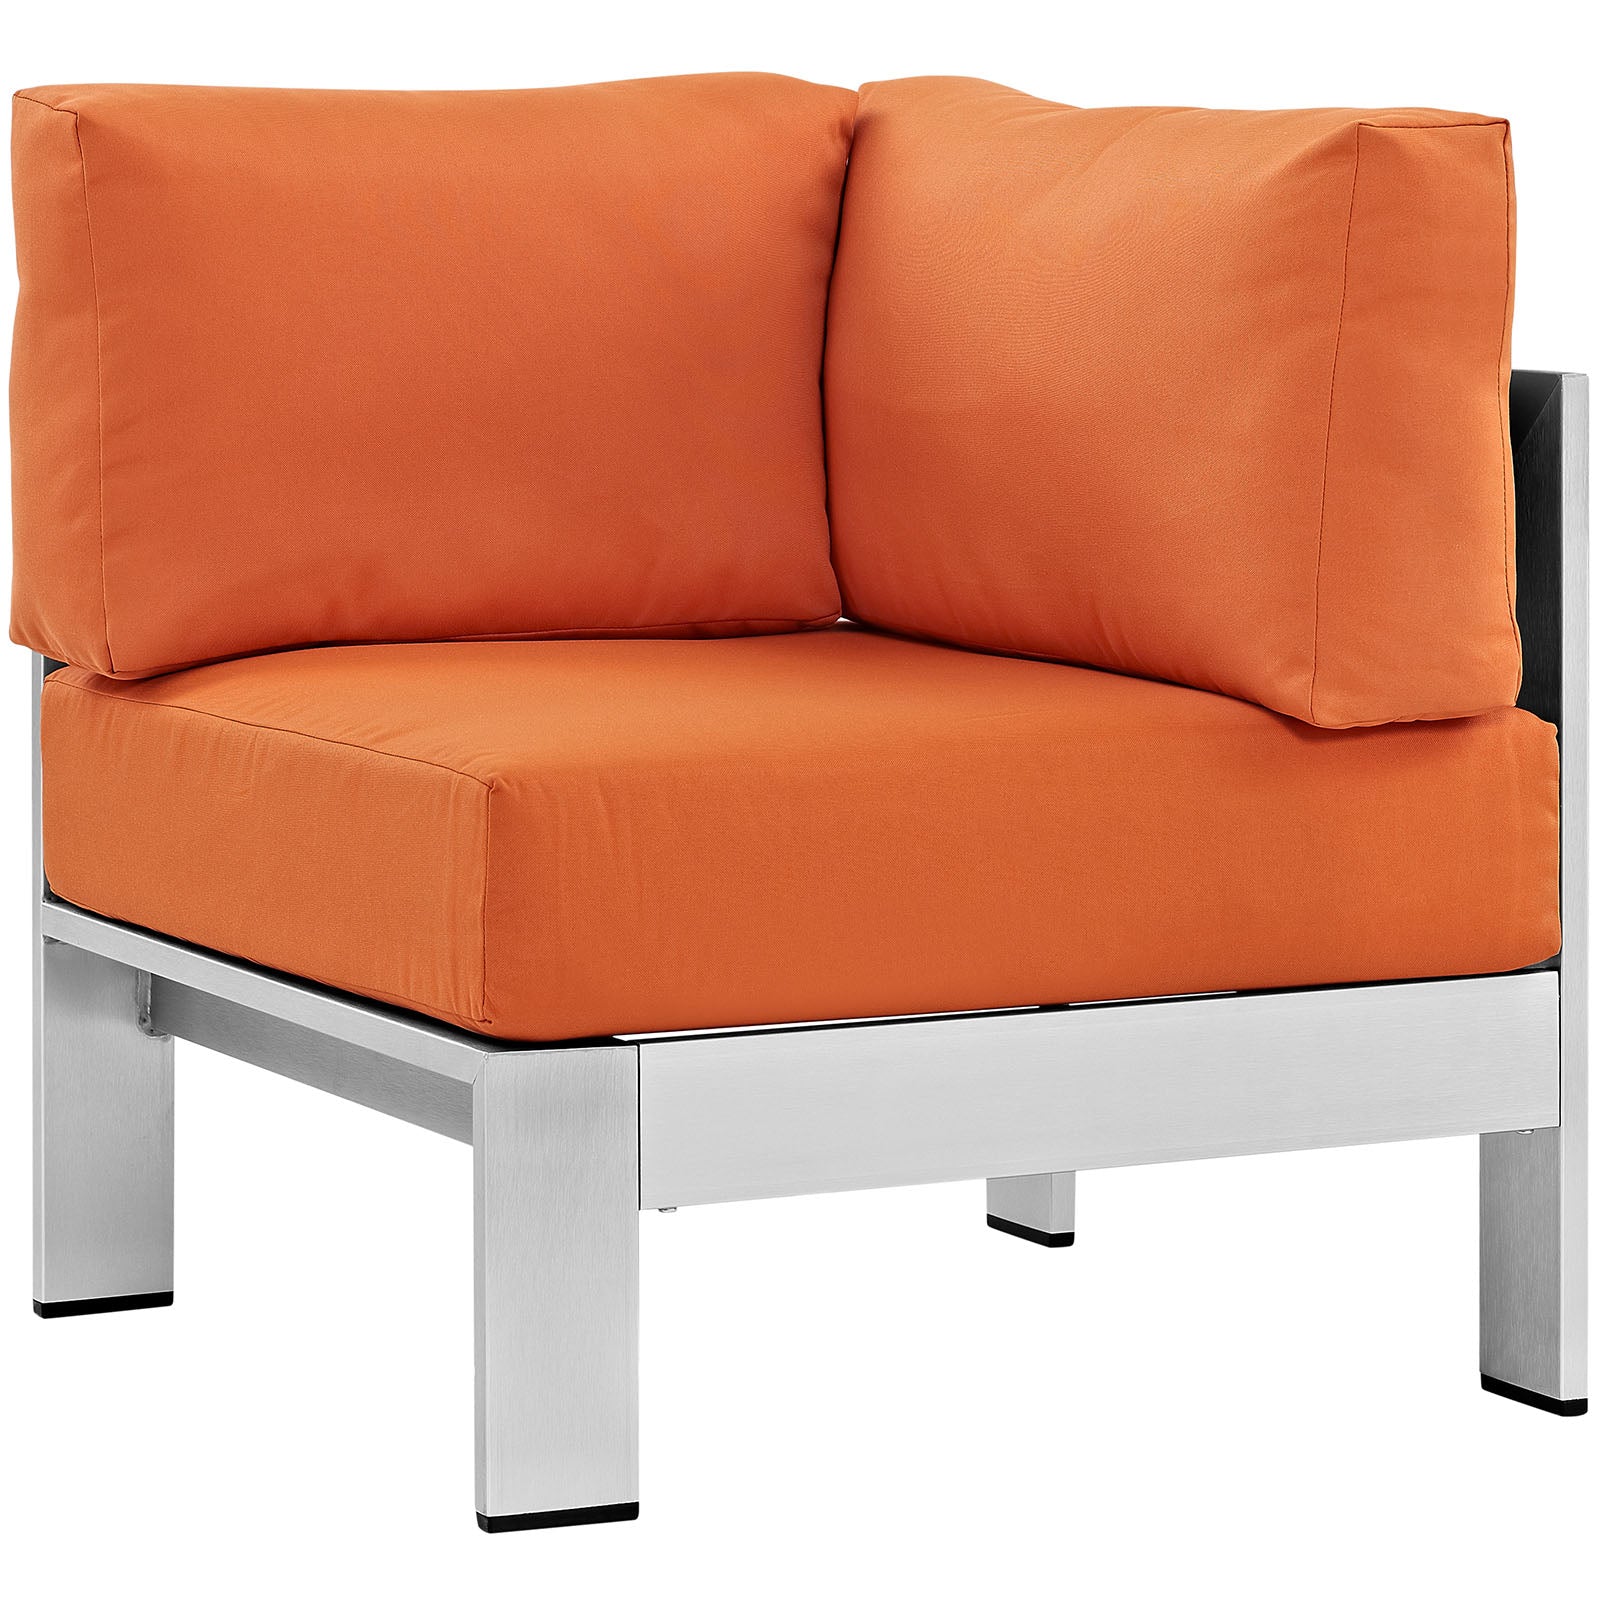 Shore 6 Piece Outdoor Patio Aluminum Sectional Sofa Set - Orange